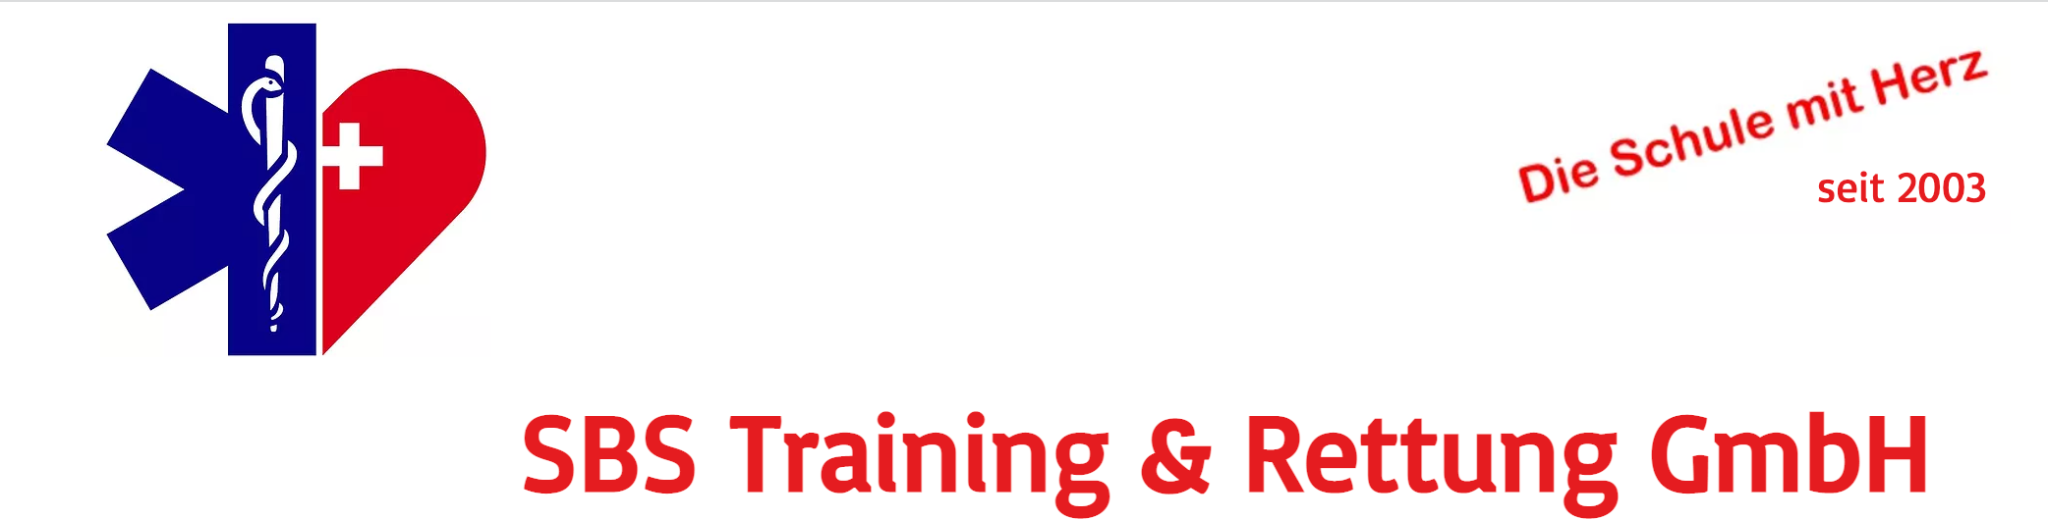 SBS Training & Rettung GmbH